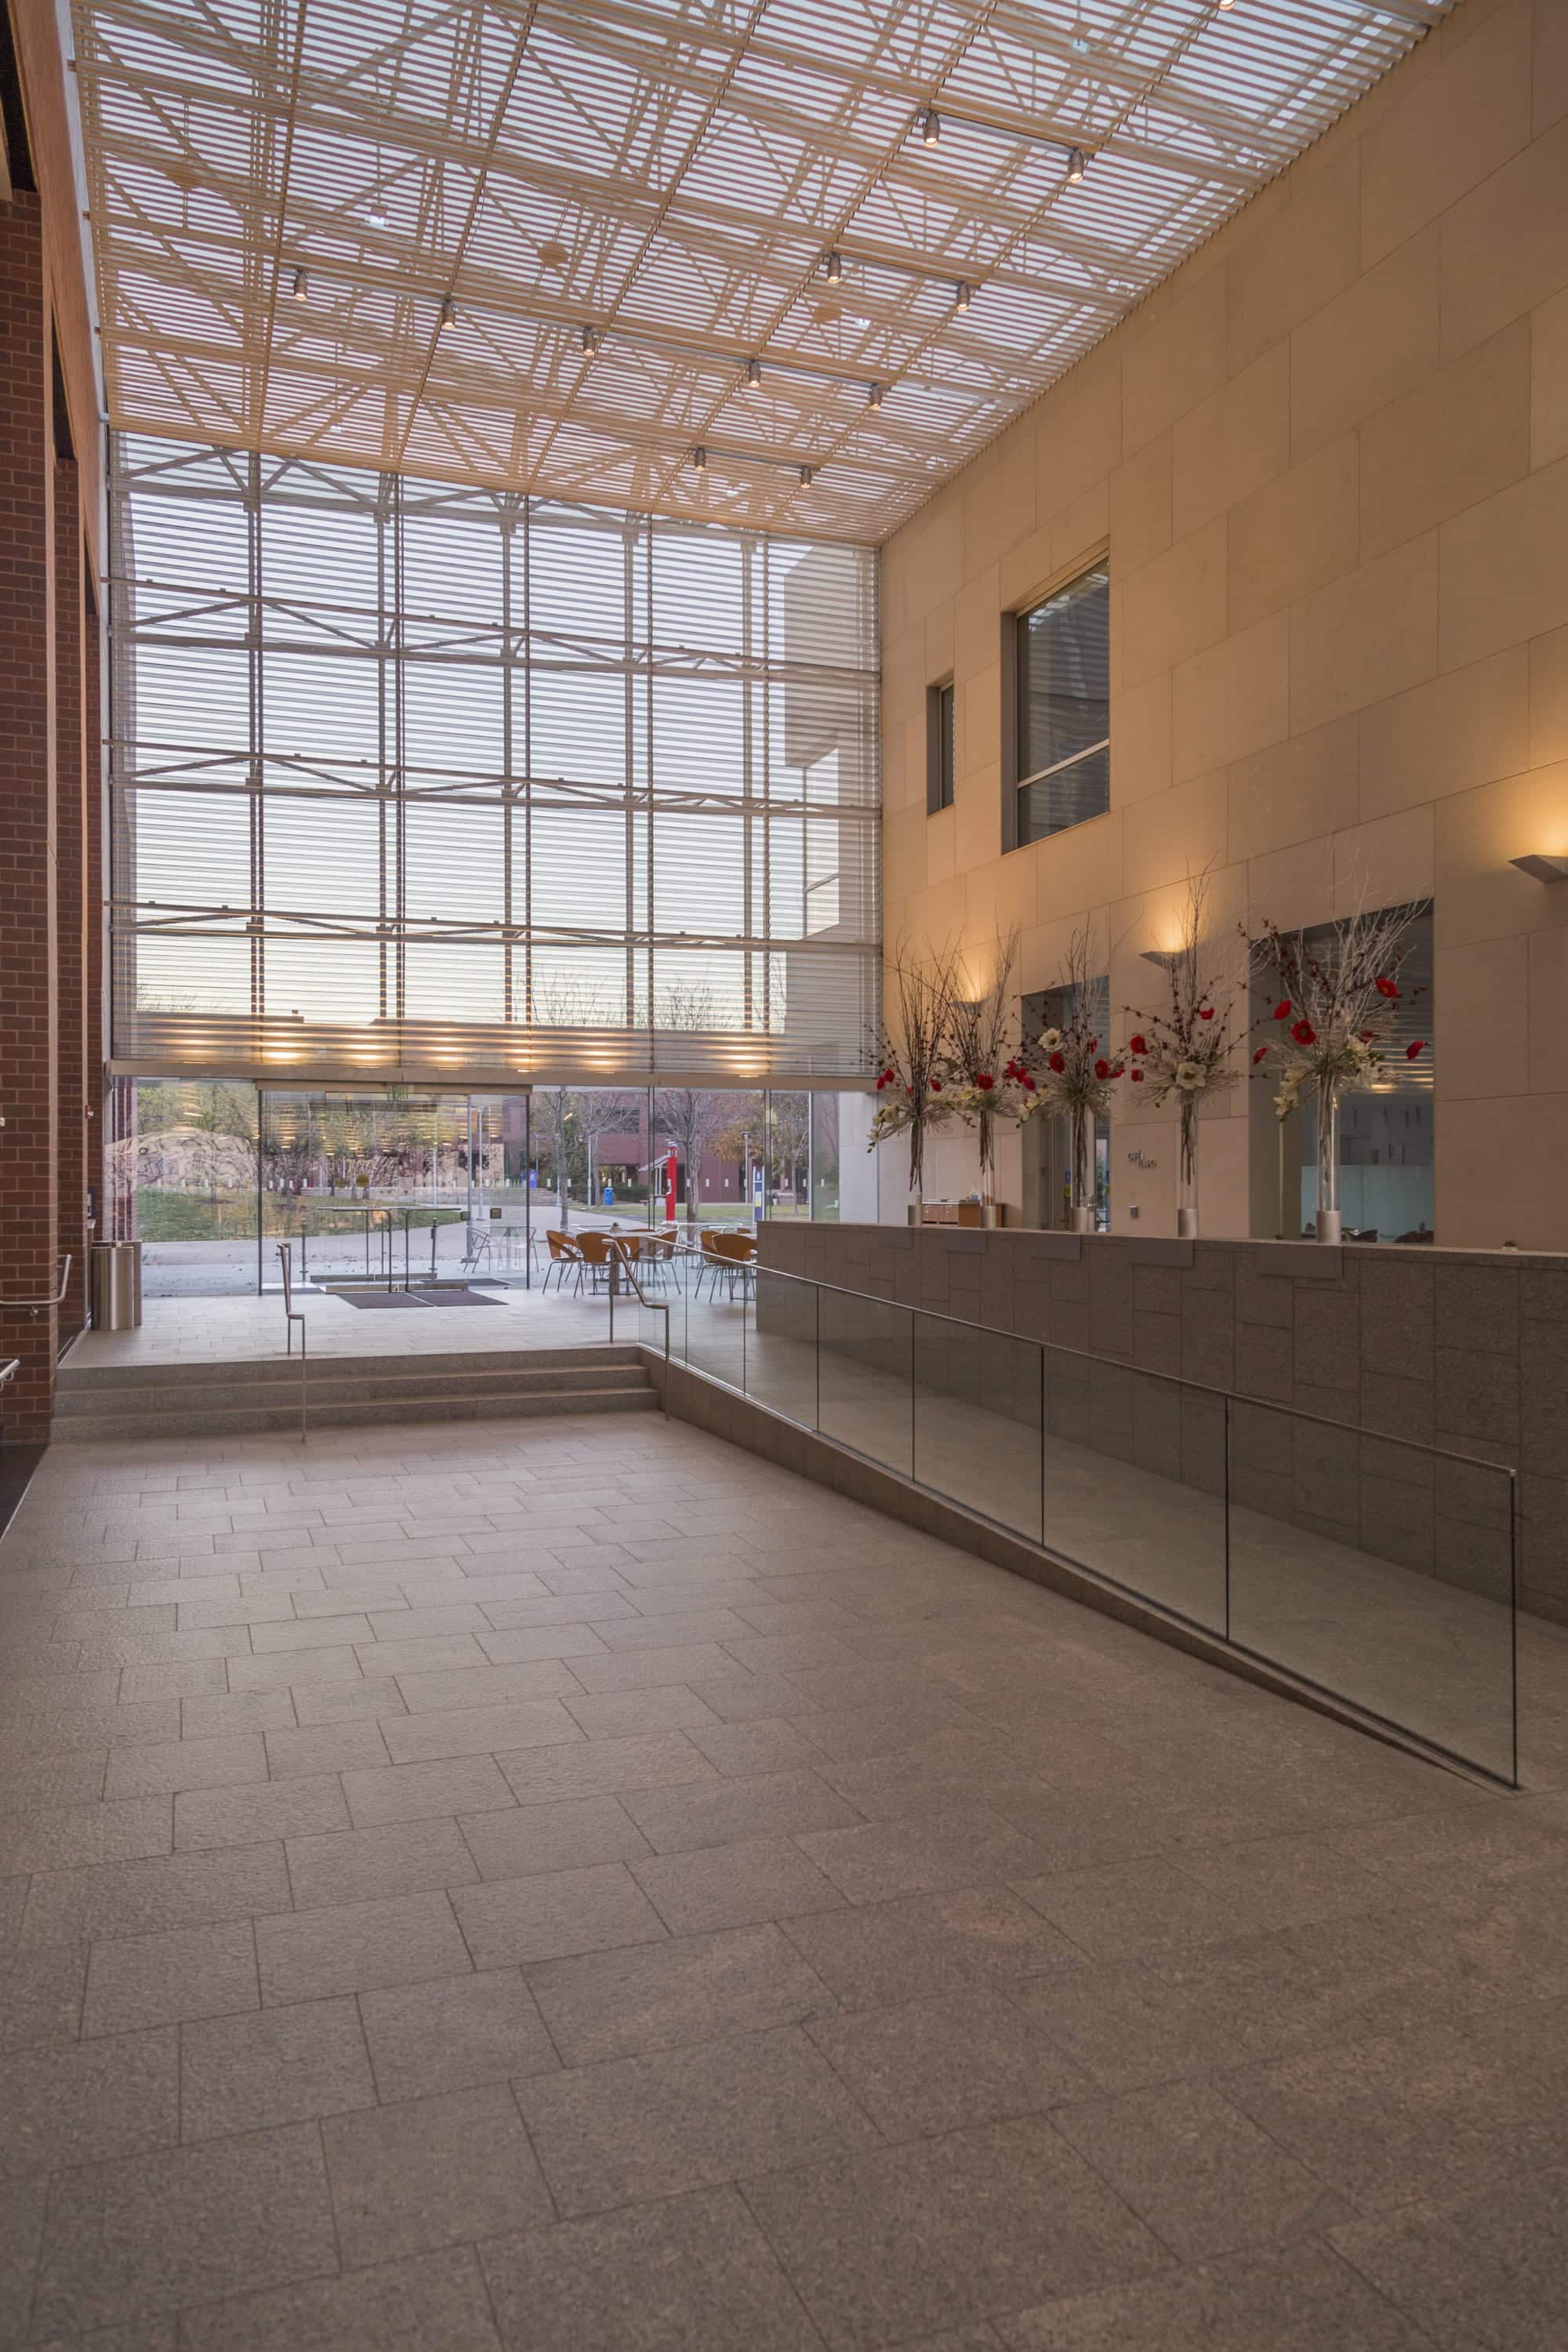 Atrium for the Nerman Museum of Contemporary Art.